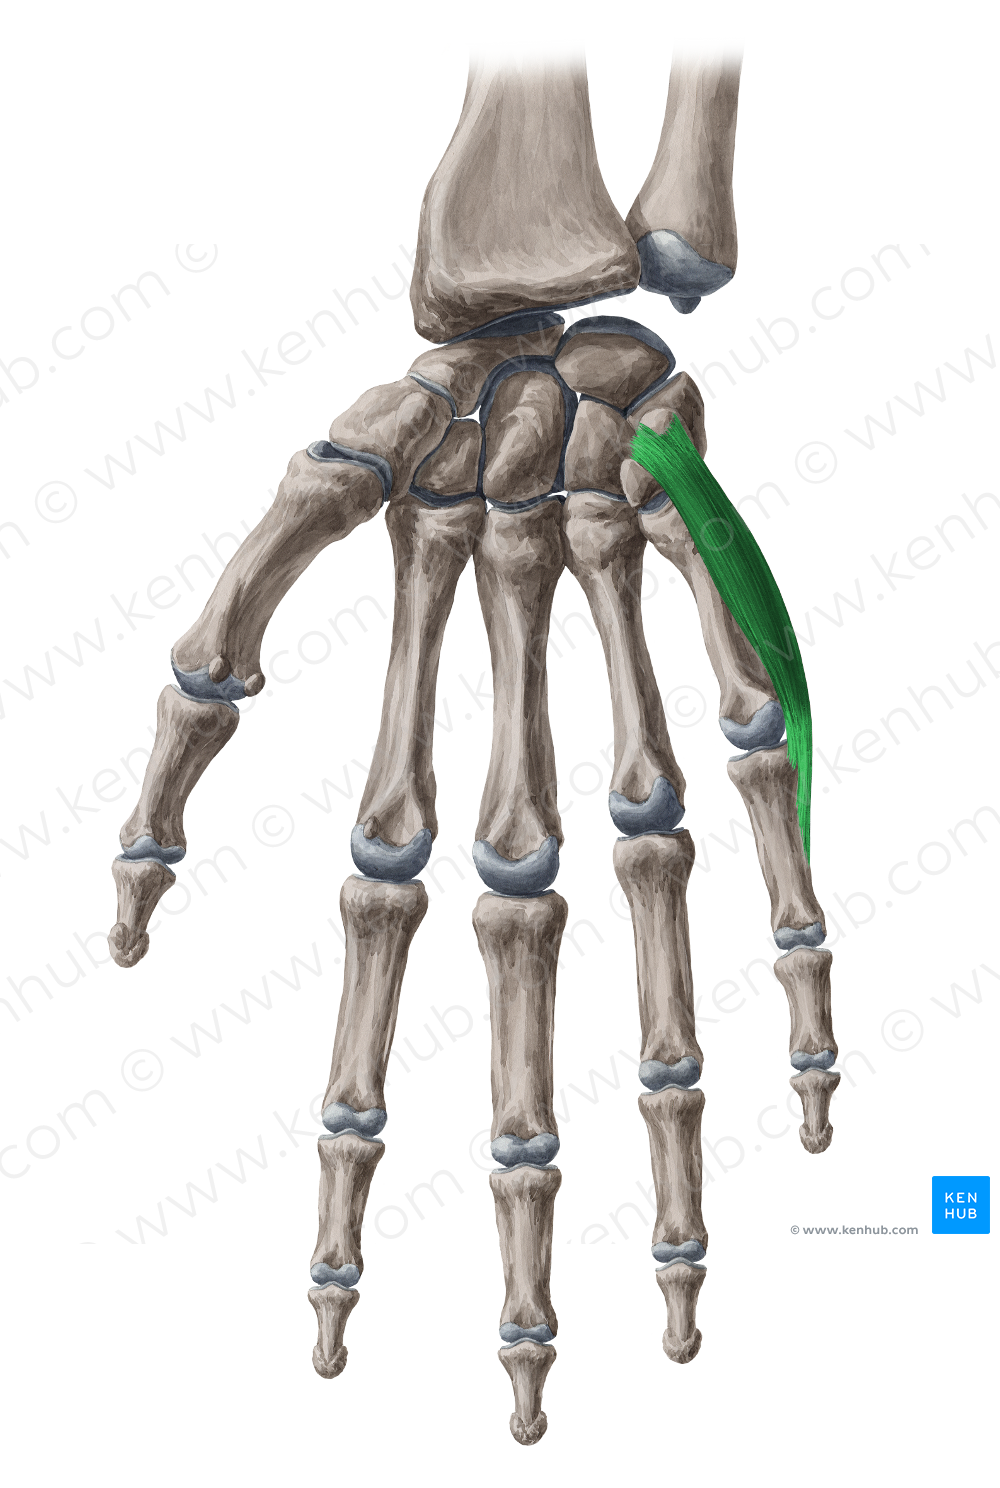 Abductor digiti minimi muscle of hand (#5168)